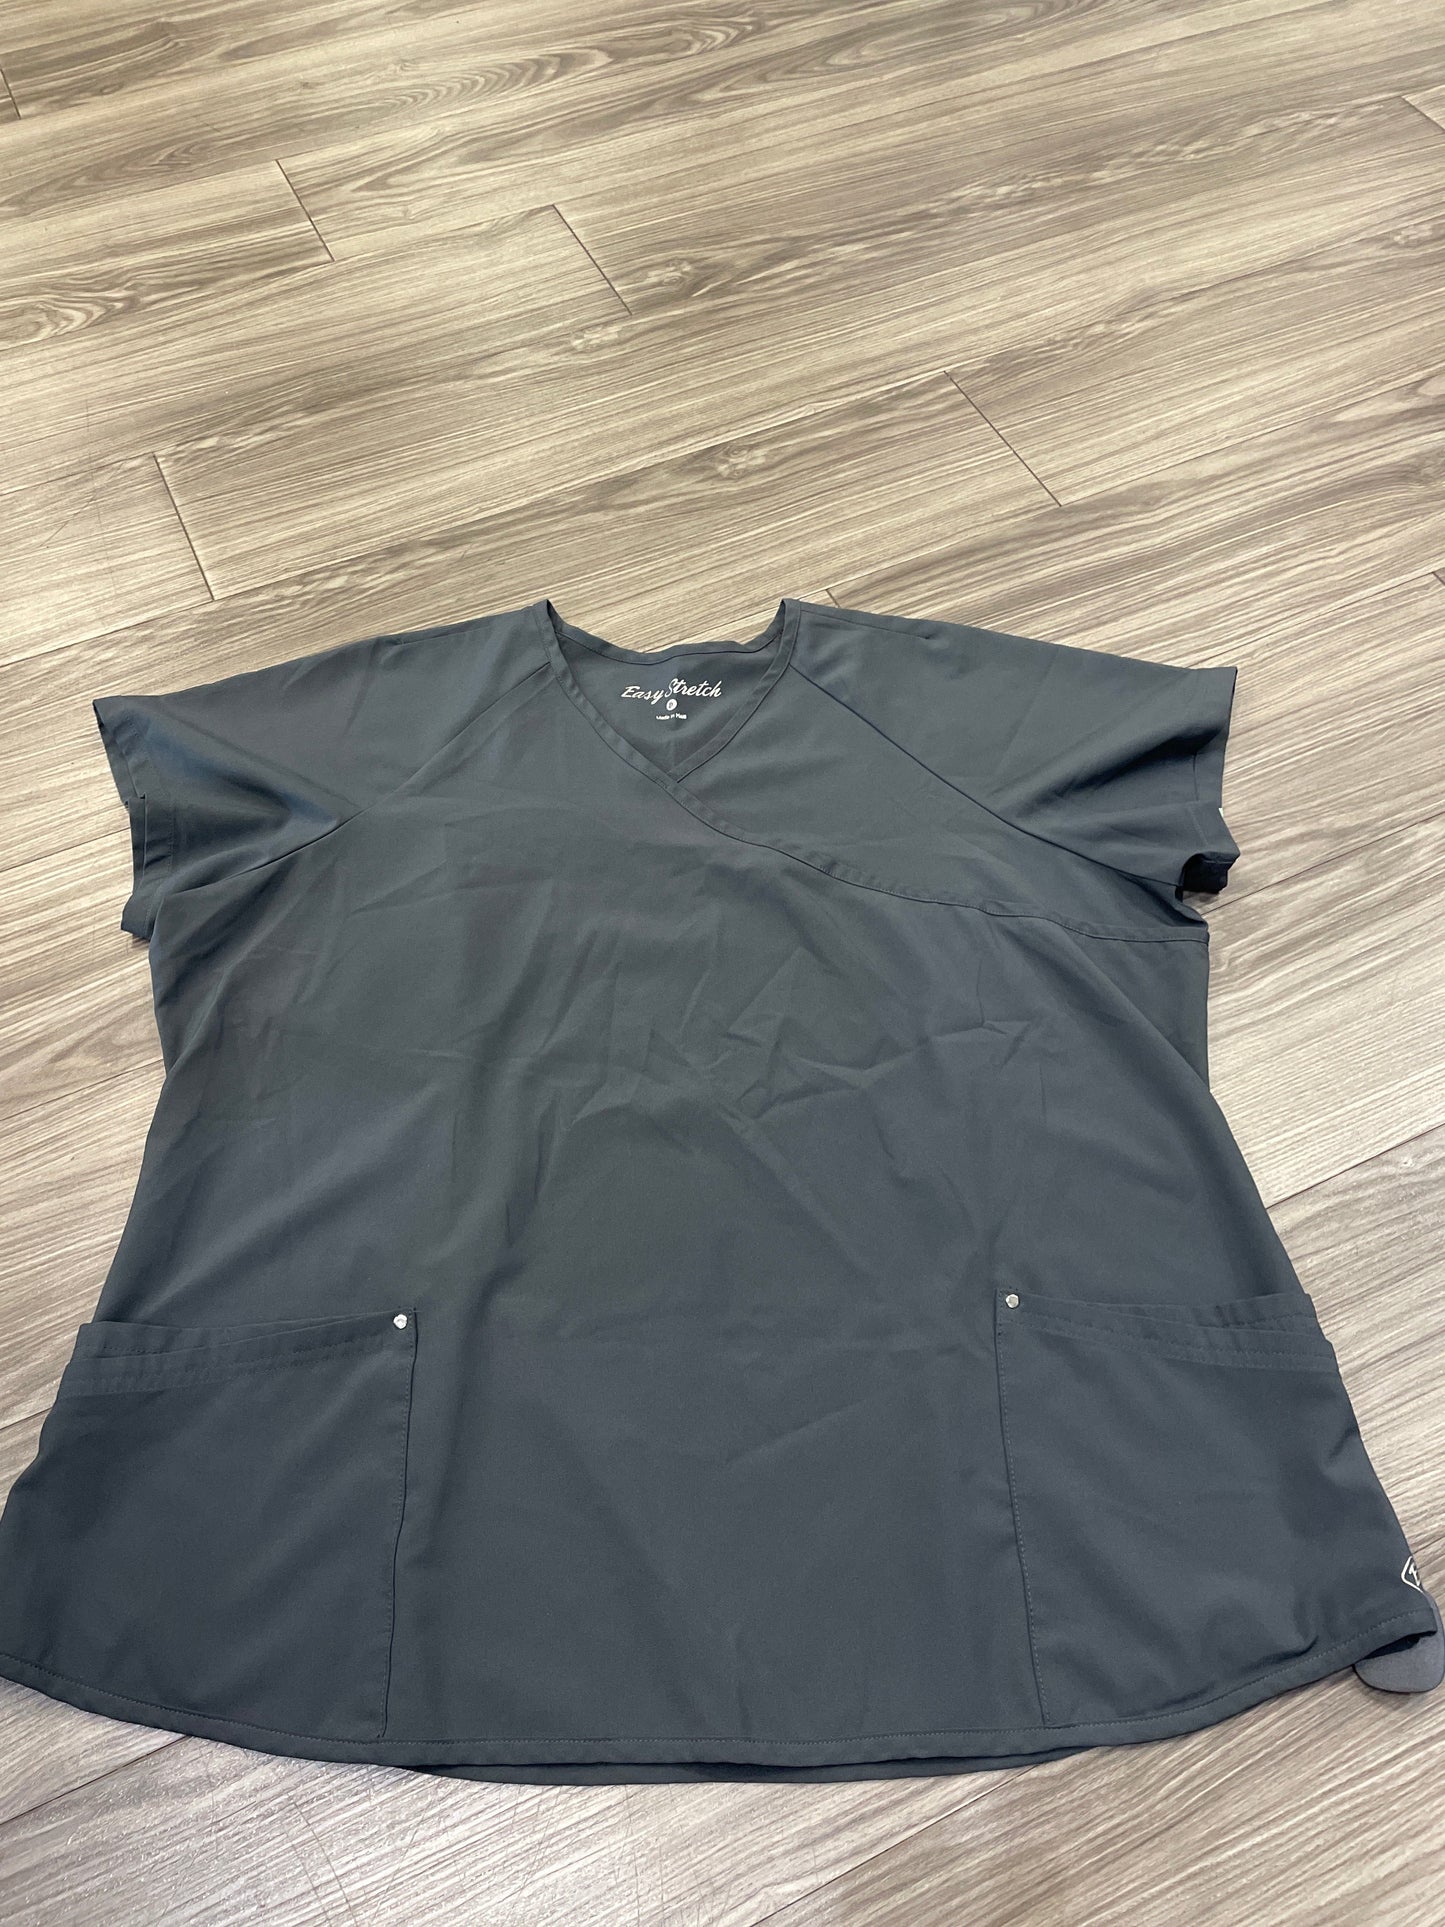 Grey Top Short Sleeve Clothes Mentor, Size 2x